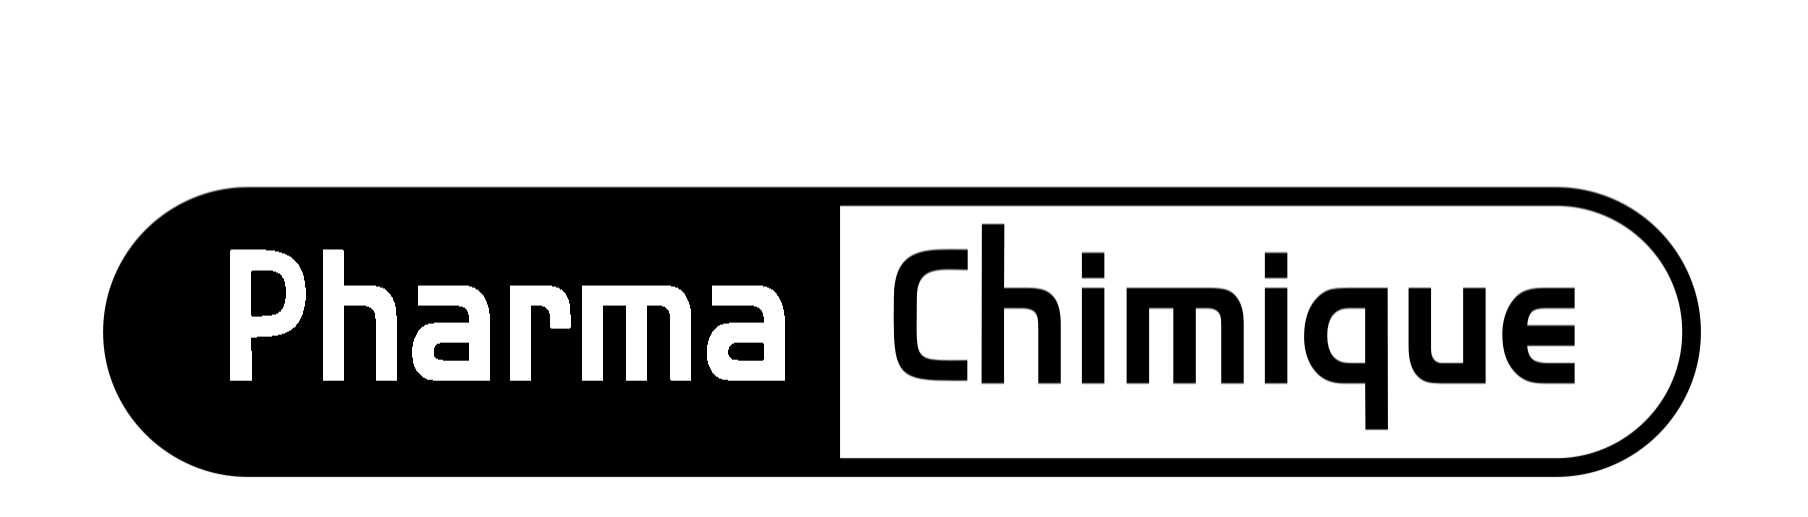 Pharma Chimique de Panama logo